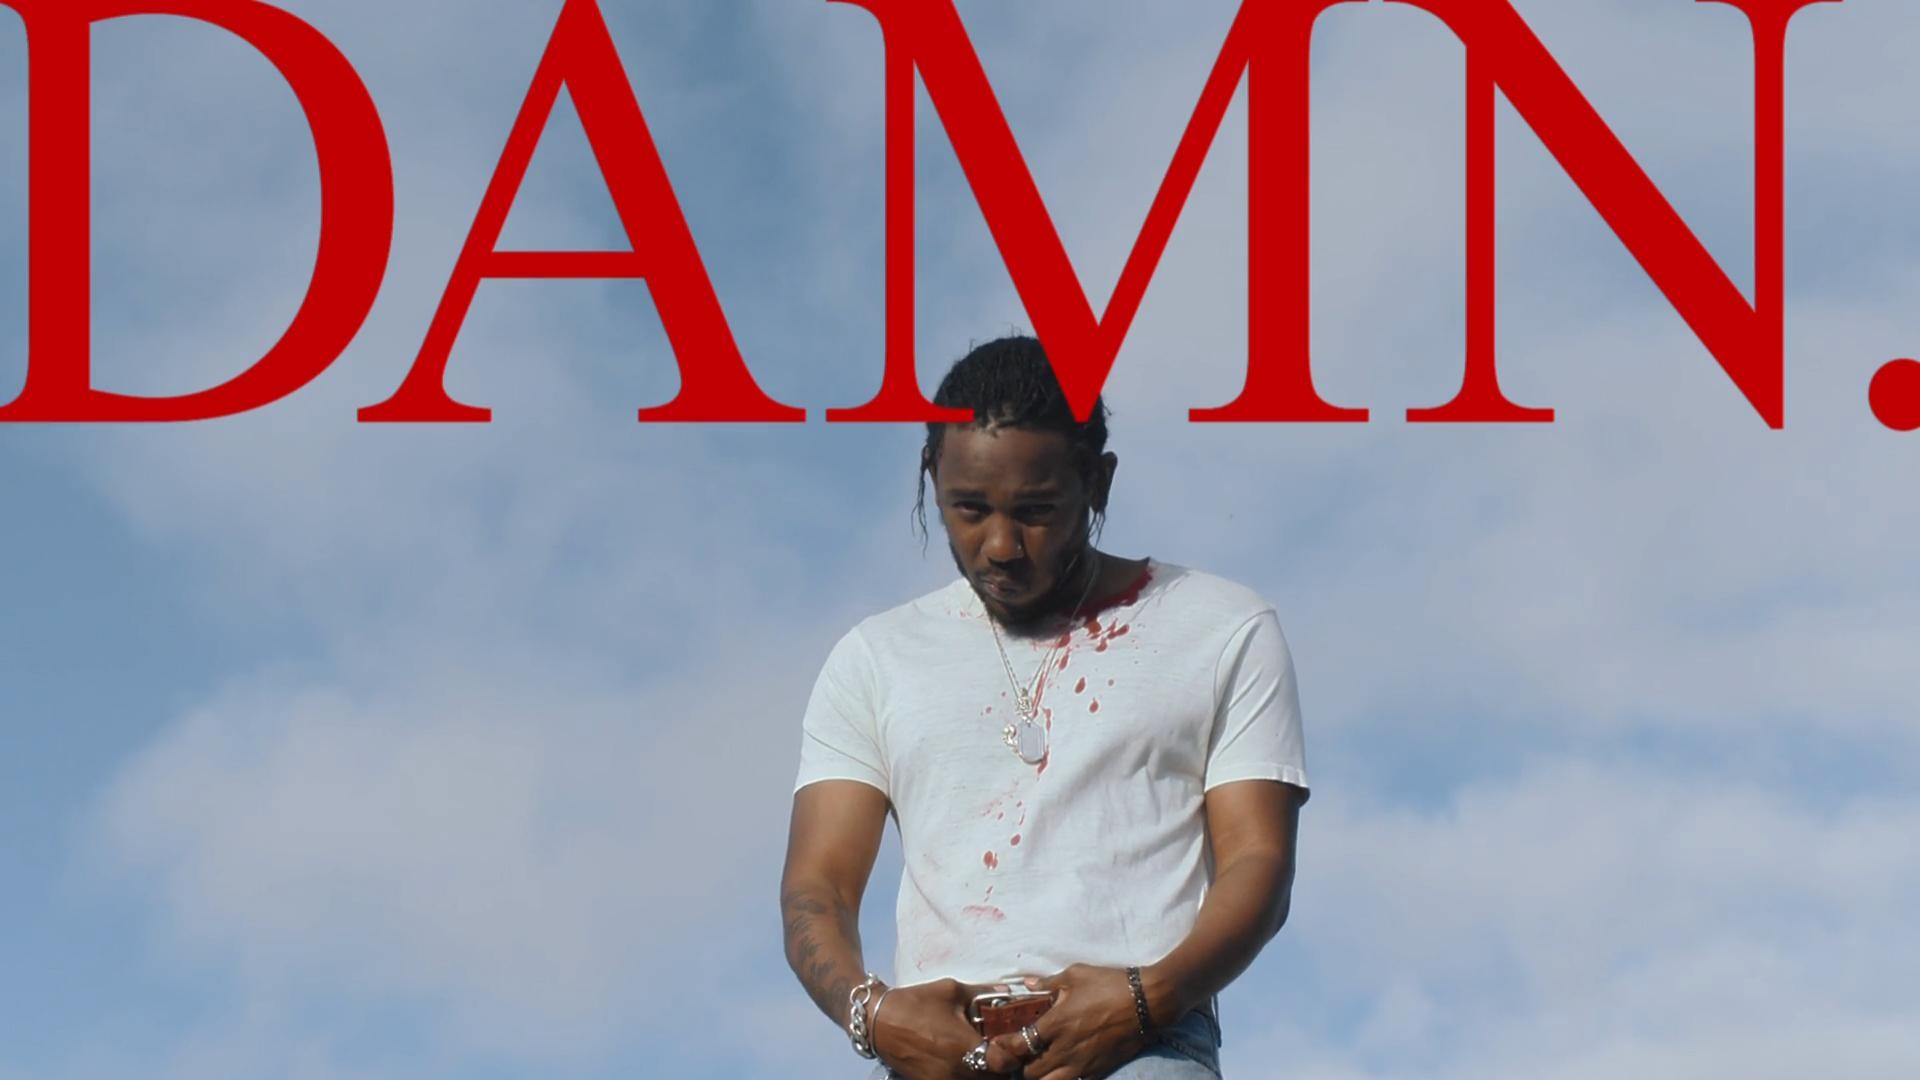 Free download Kendrick Lamar Wallpapers 76 images [1920x1080] for your  Desktop, Mobile & Tablet, Explore 49+ Kendrick Wallpaper